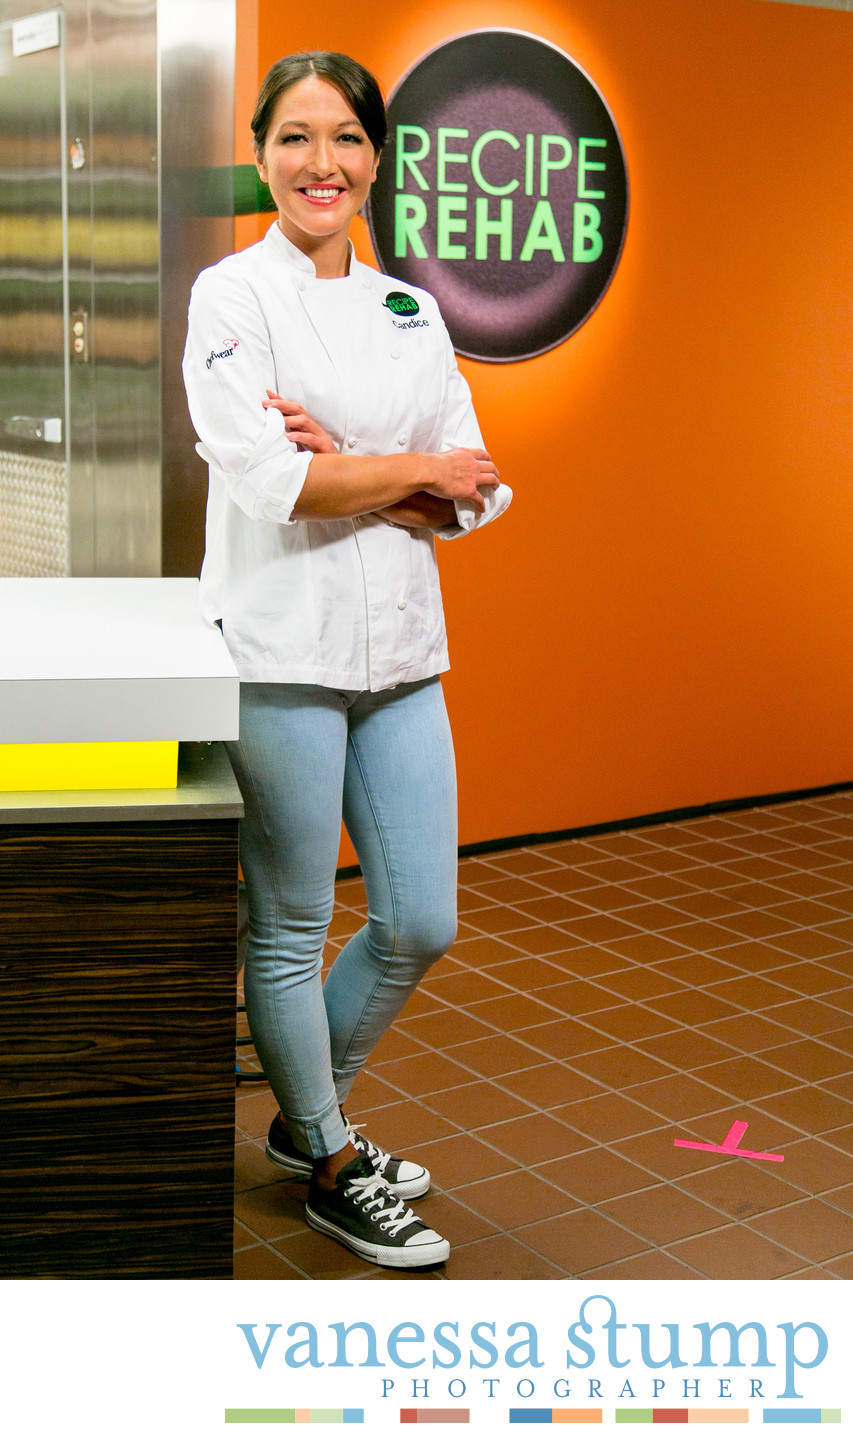 Portrait of Chef Candice Kumai on the set of Recipe Rehab